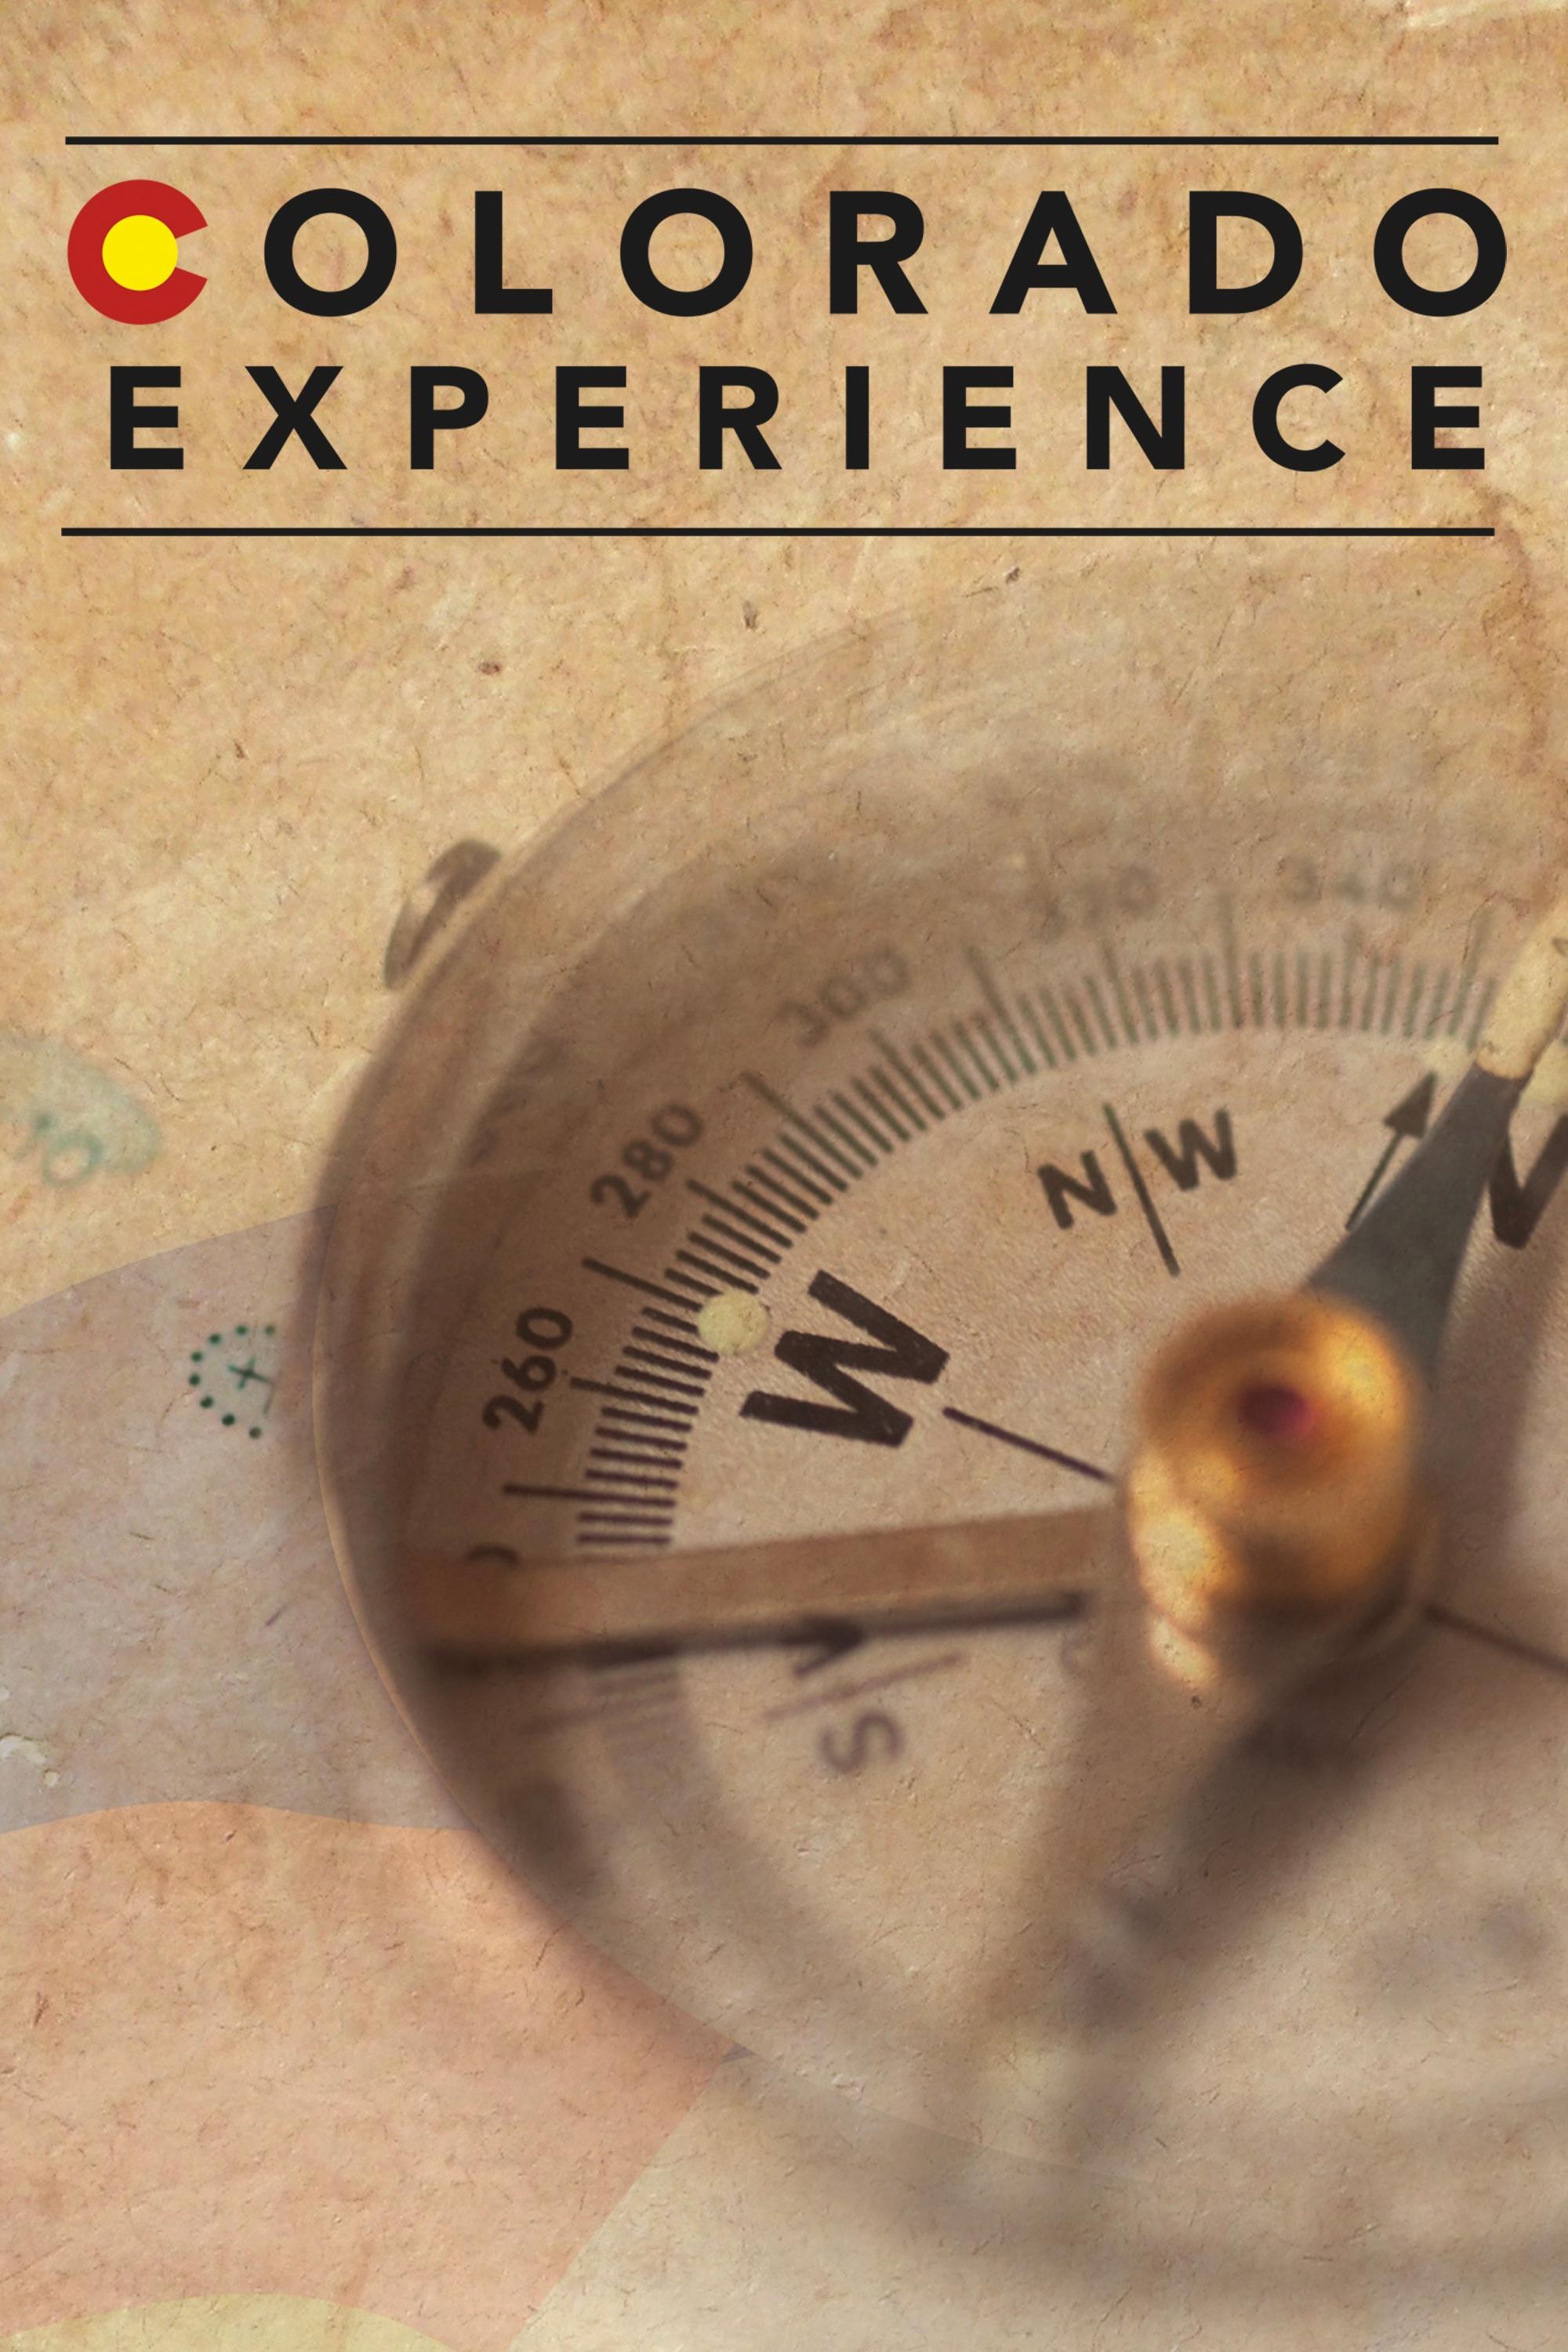 Colorado Experience show's poster